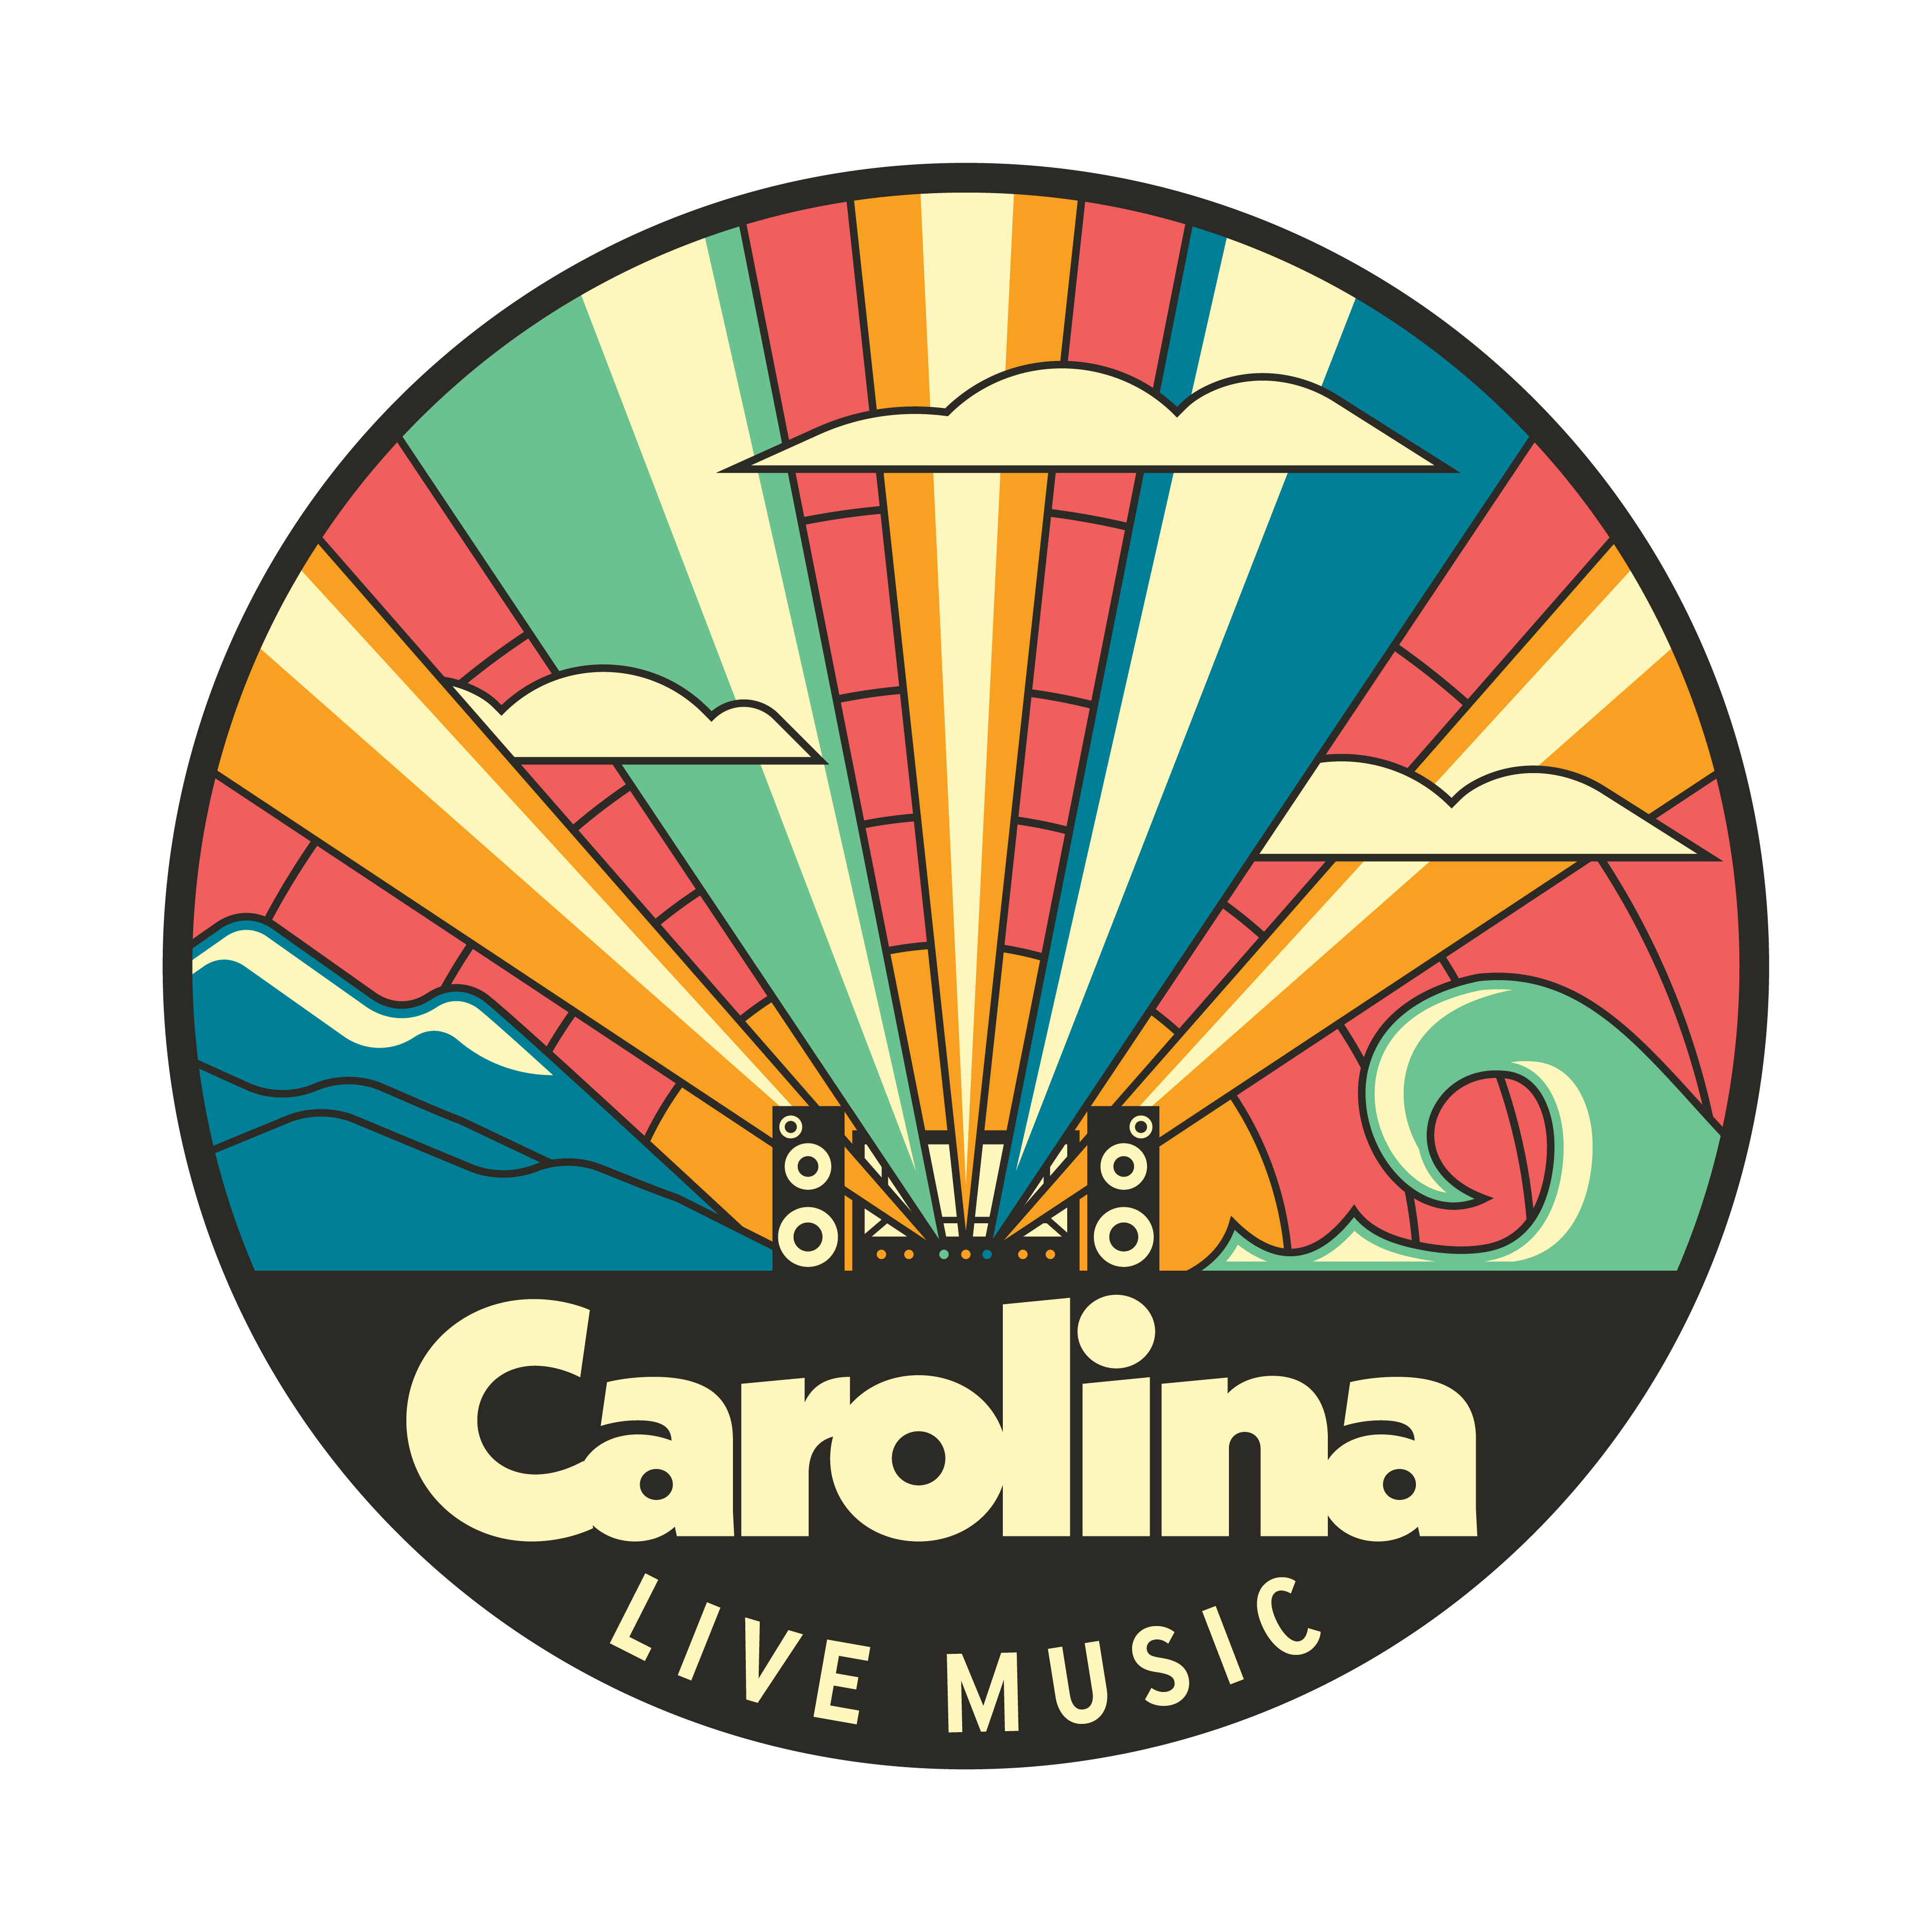 Carolina Live Music Badge logo design by logo designer Logarhythm Creative for your inspiration and for the worlds largest logo competition